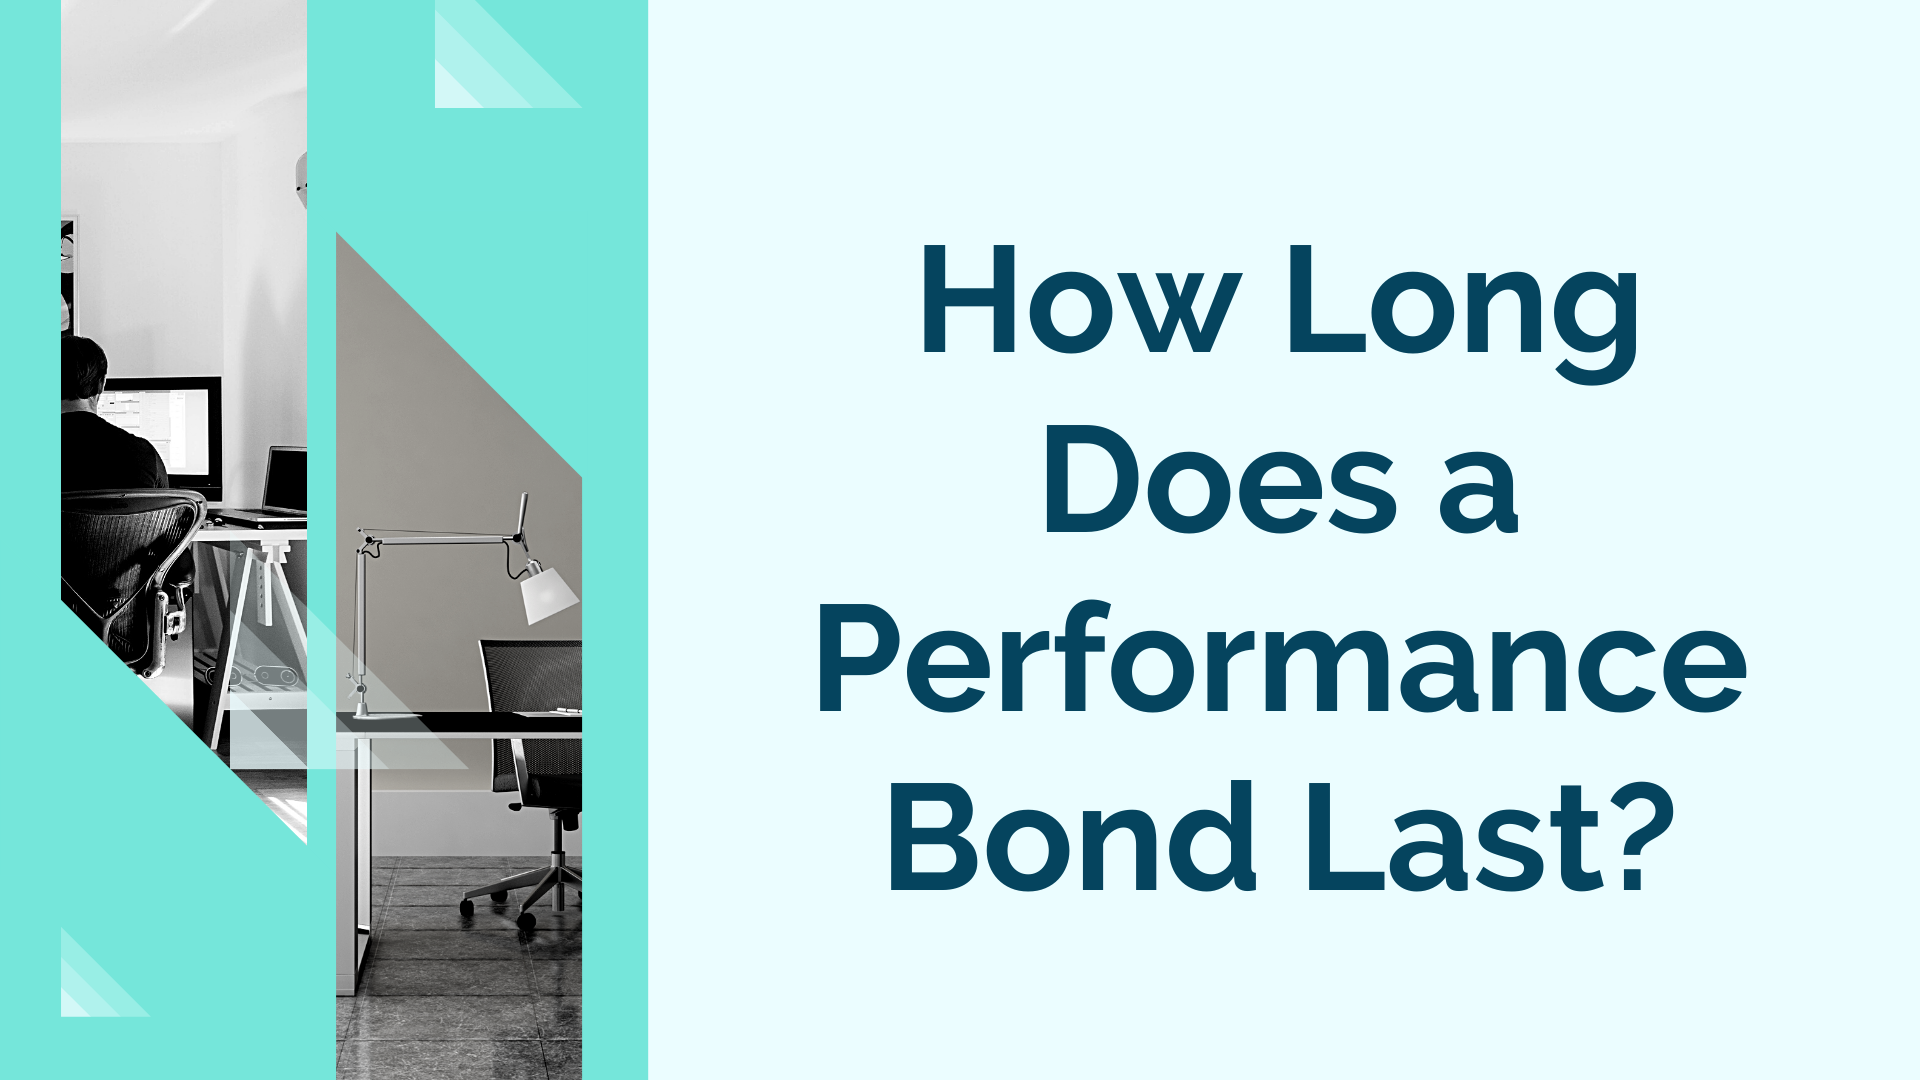 performance bond - Do performance bonds expire